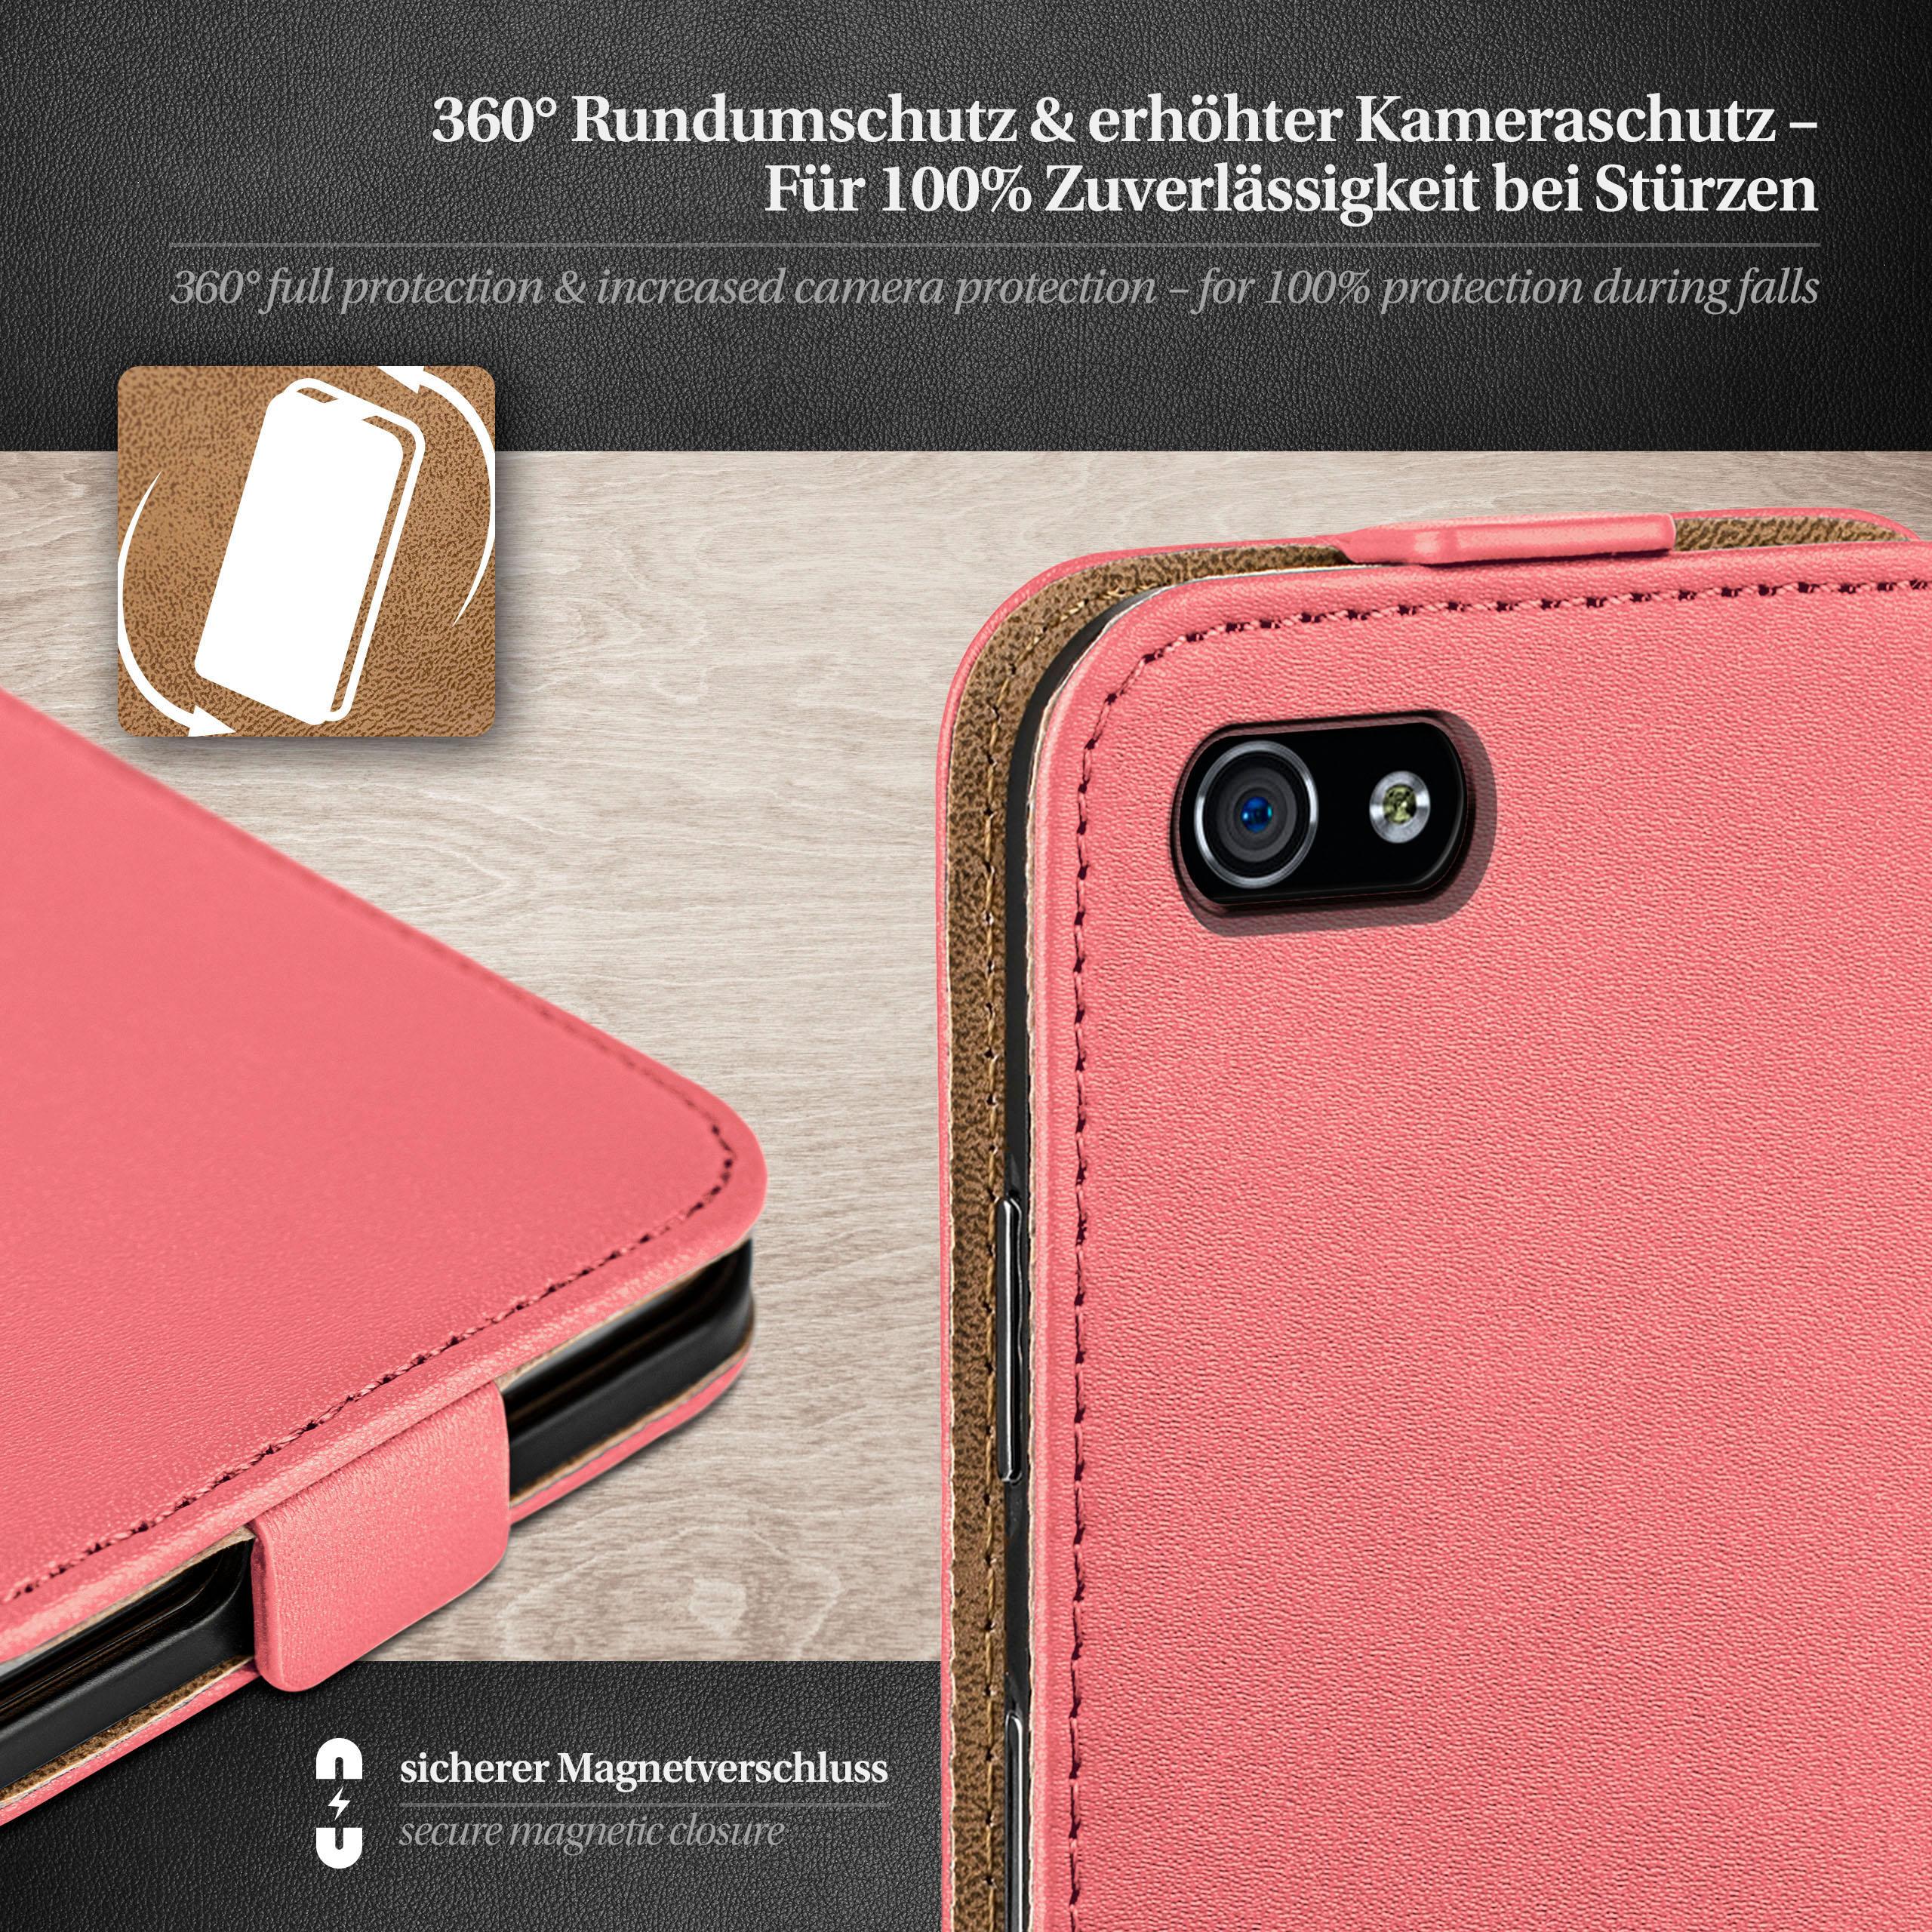 iPhone Coral-Rose MOEX Case, iPhone Flip / 4, Flip Apple, 4s Cover,